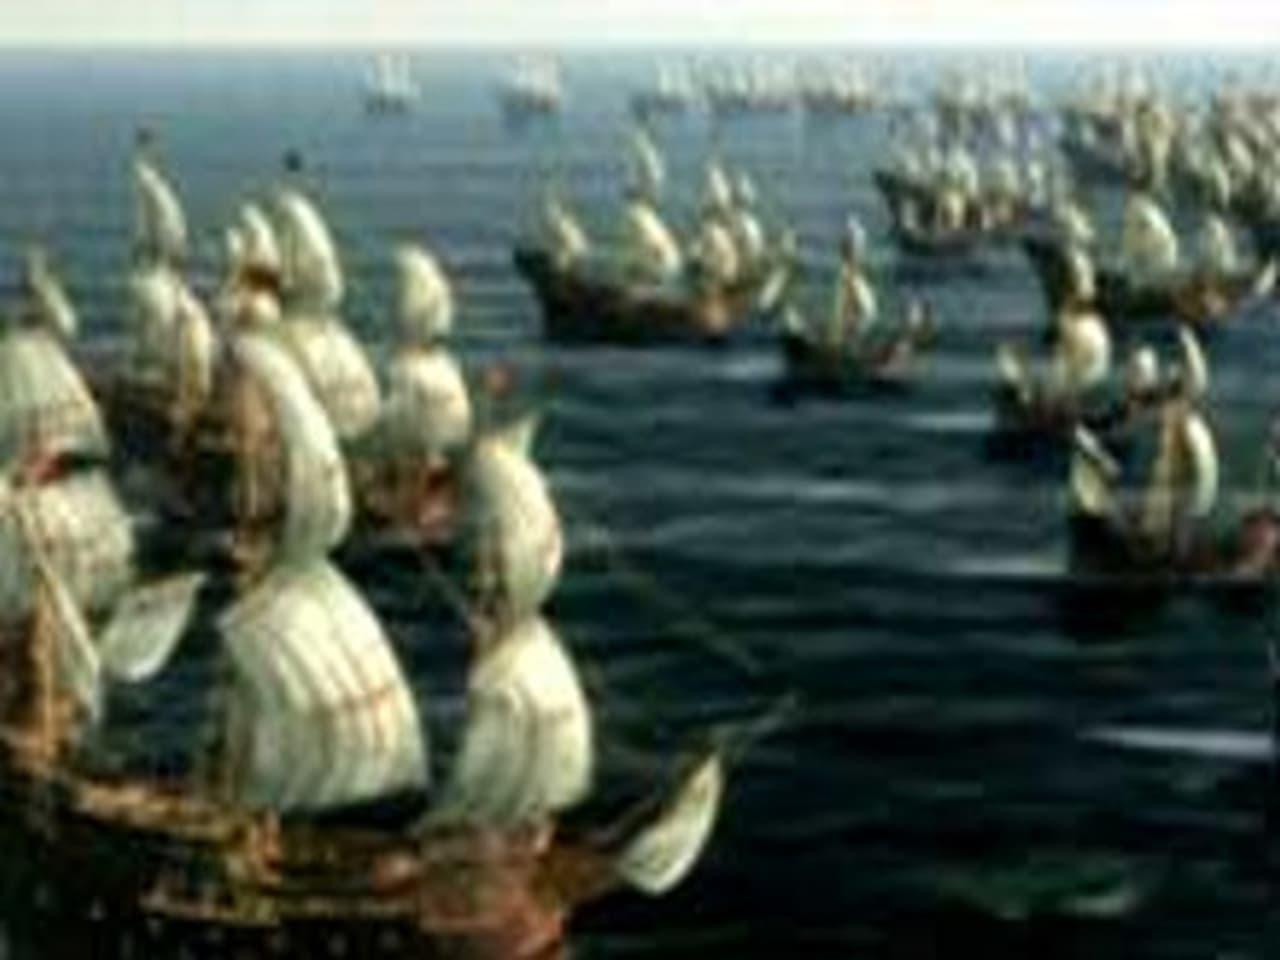 The Battle Against the Spanish Armada